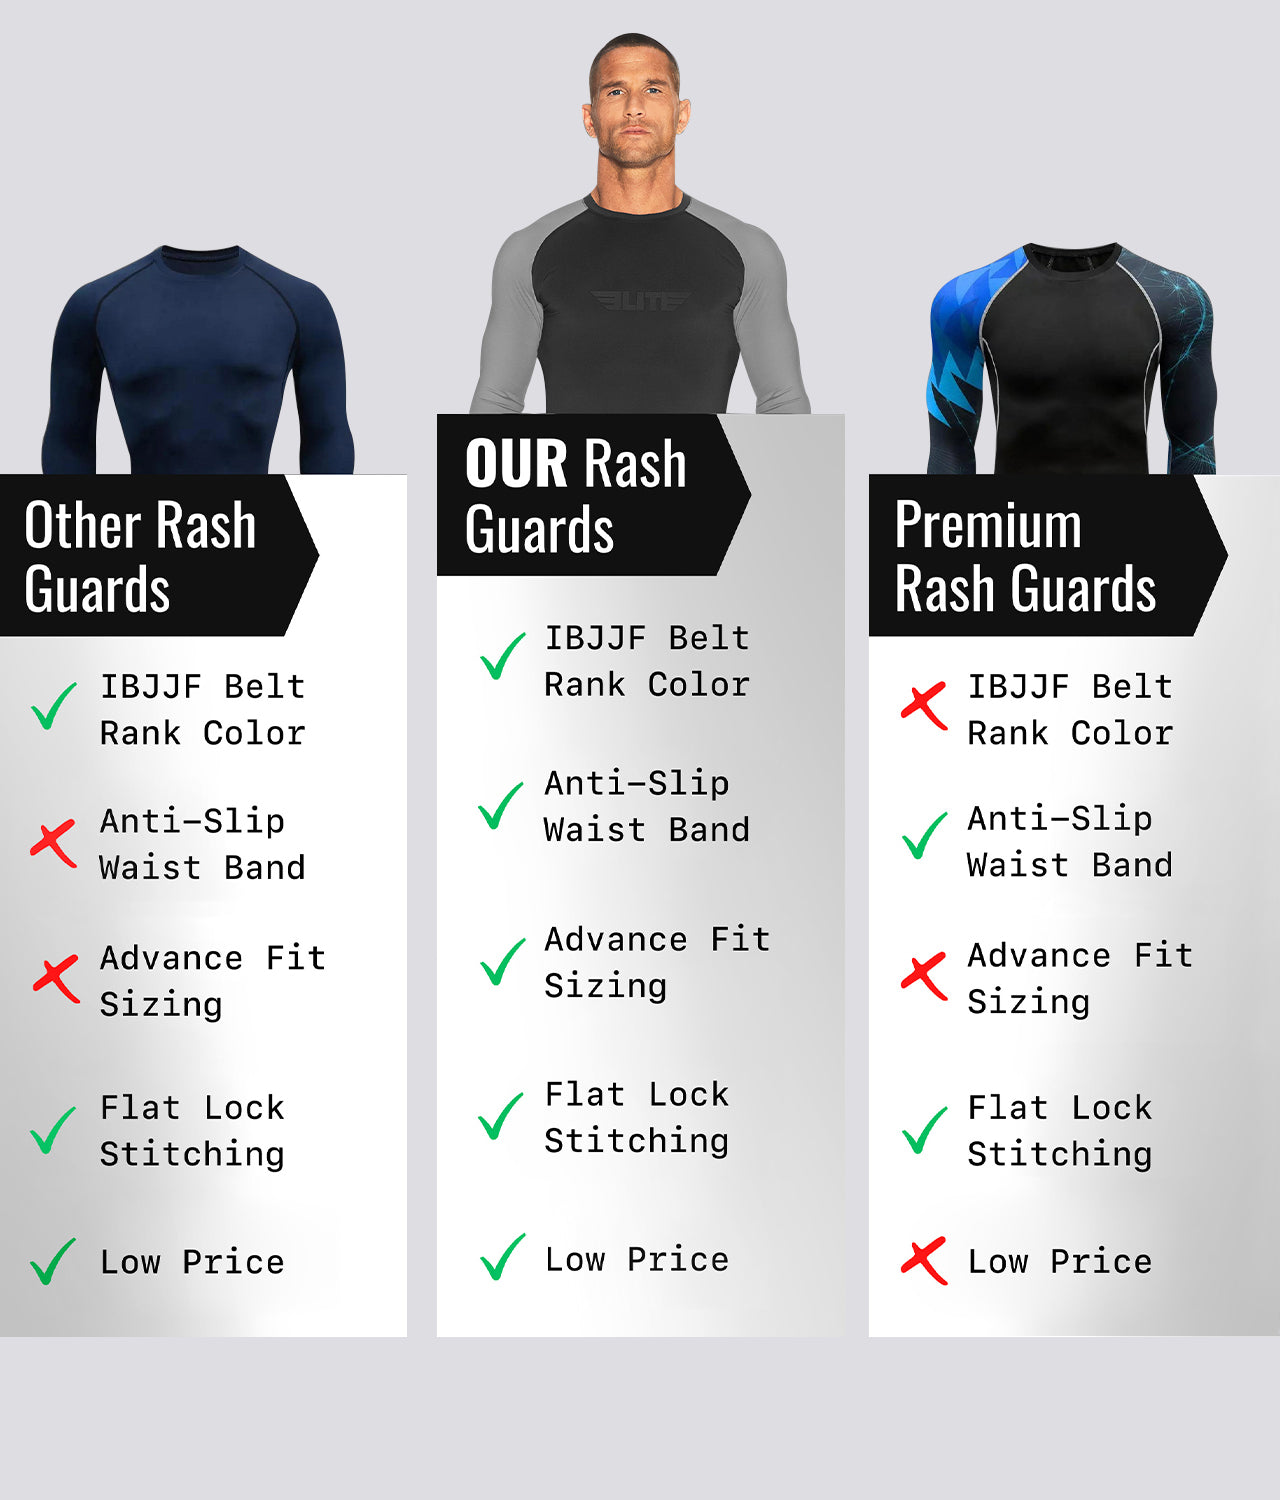 Elite Sports Men's Standard Gray Long Sleeve Training Rash Guard Comparison